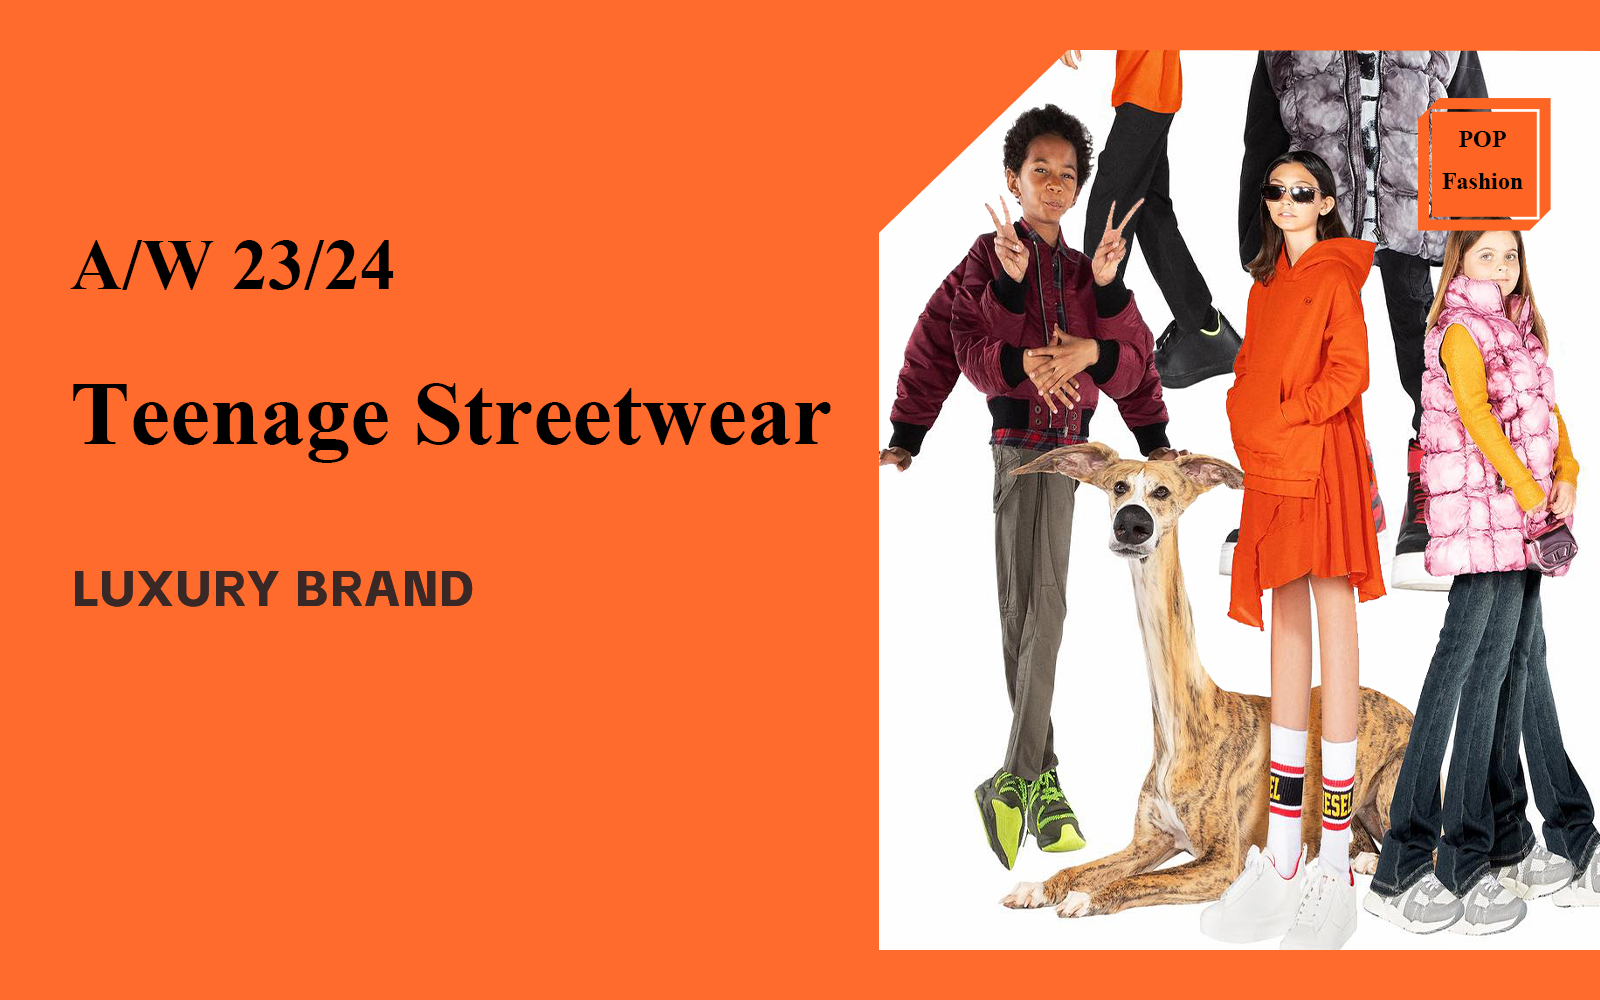 Teenage Streetwear -- The Comprehensive Analysis of Luxury Kidswear Brand